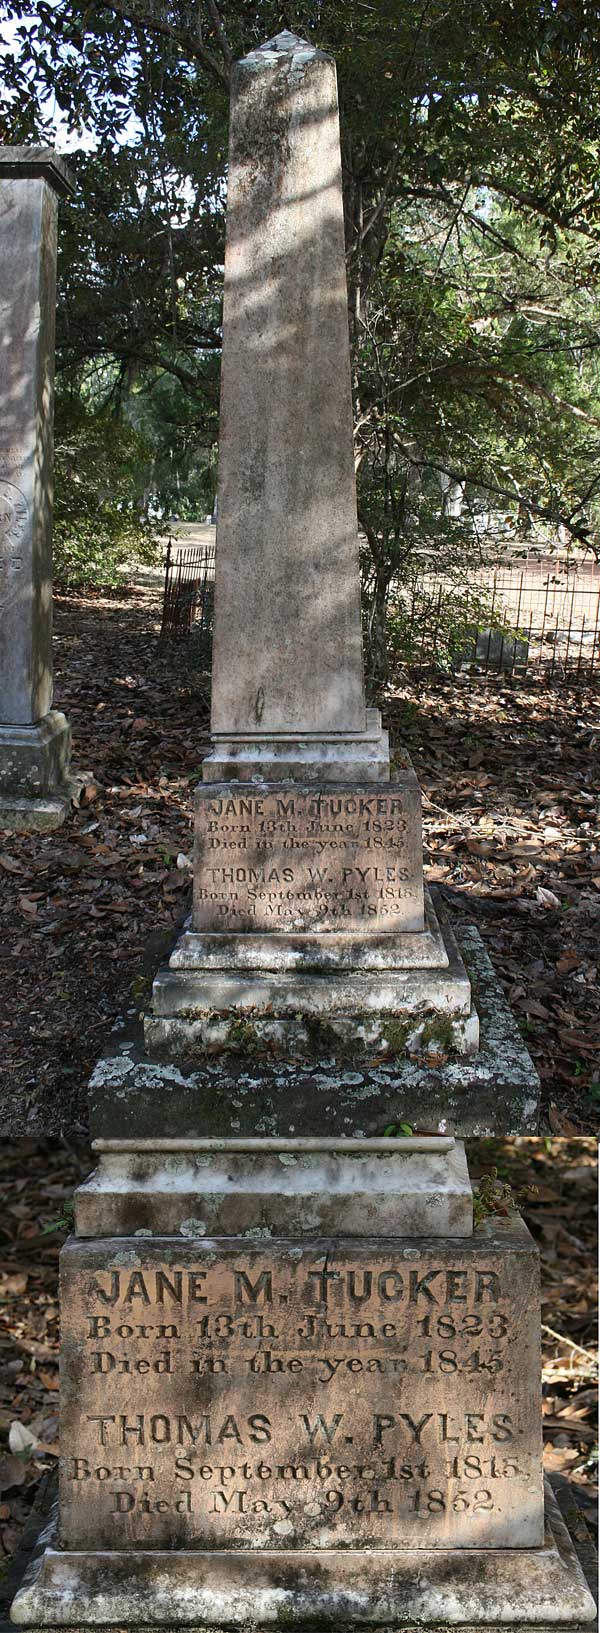 Jane M. Tucker & Thomas W. Pyles Gravestone Photo